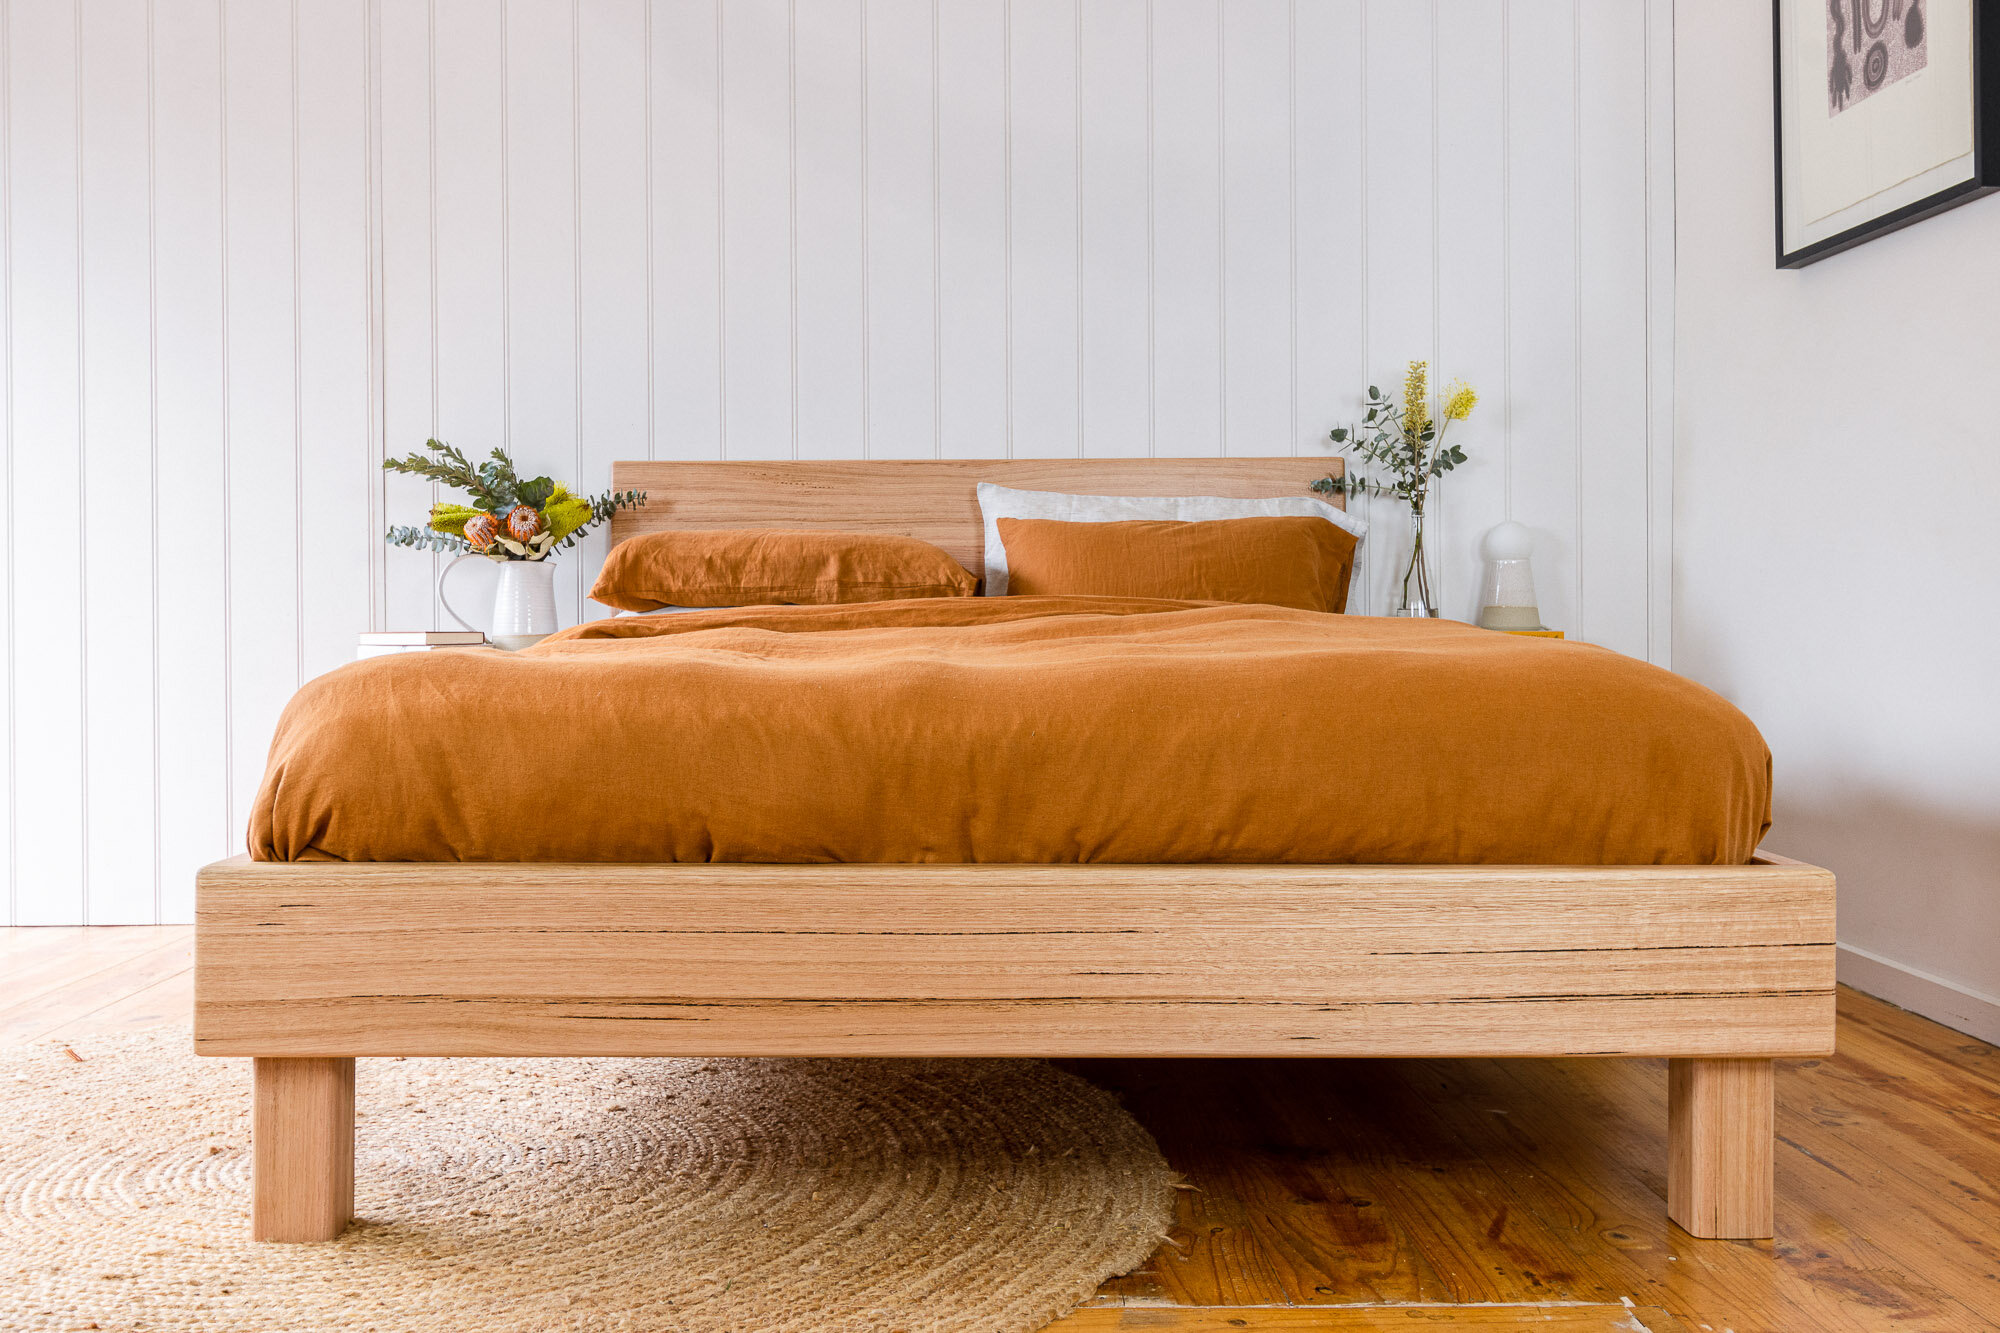 Al And Imo Custom Timber Furniture, Angled Bed Frame